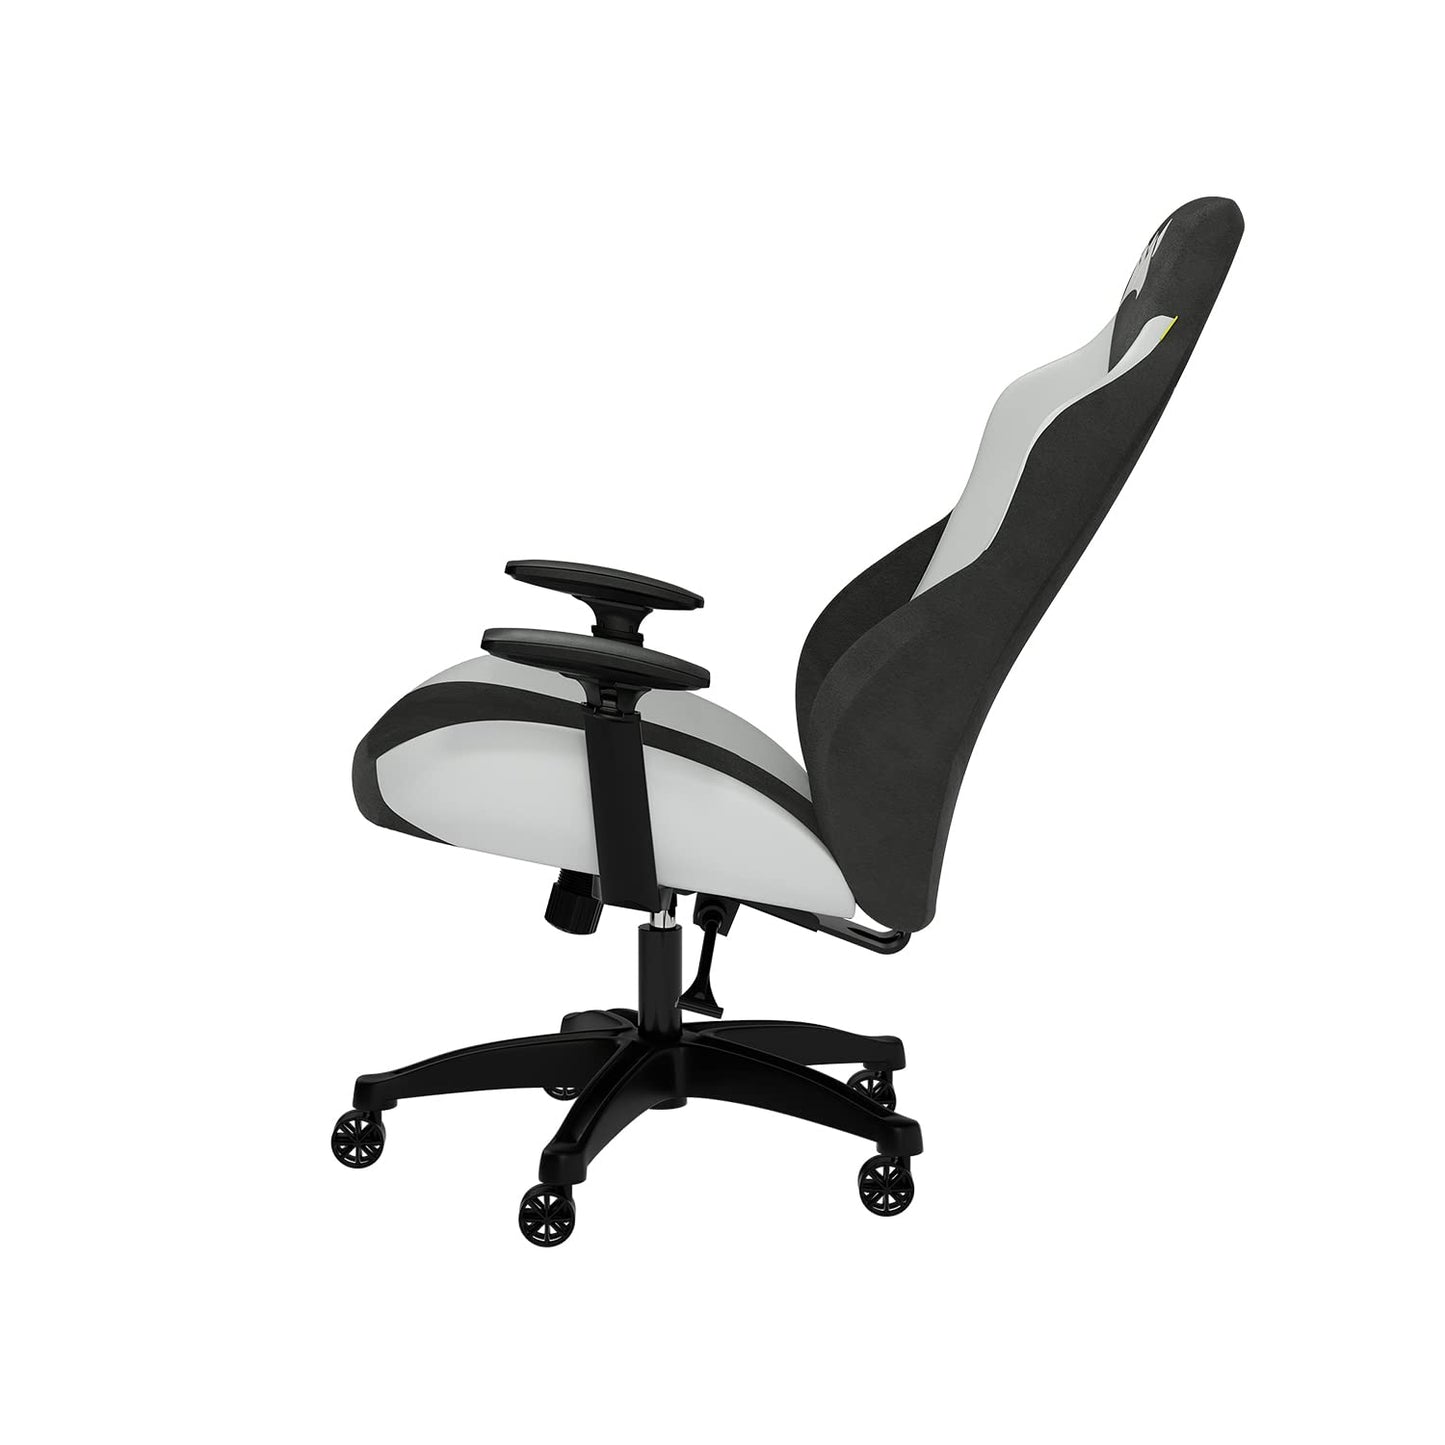 Corsair TC70 Remix Gaming Chair White